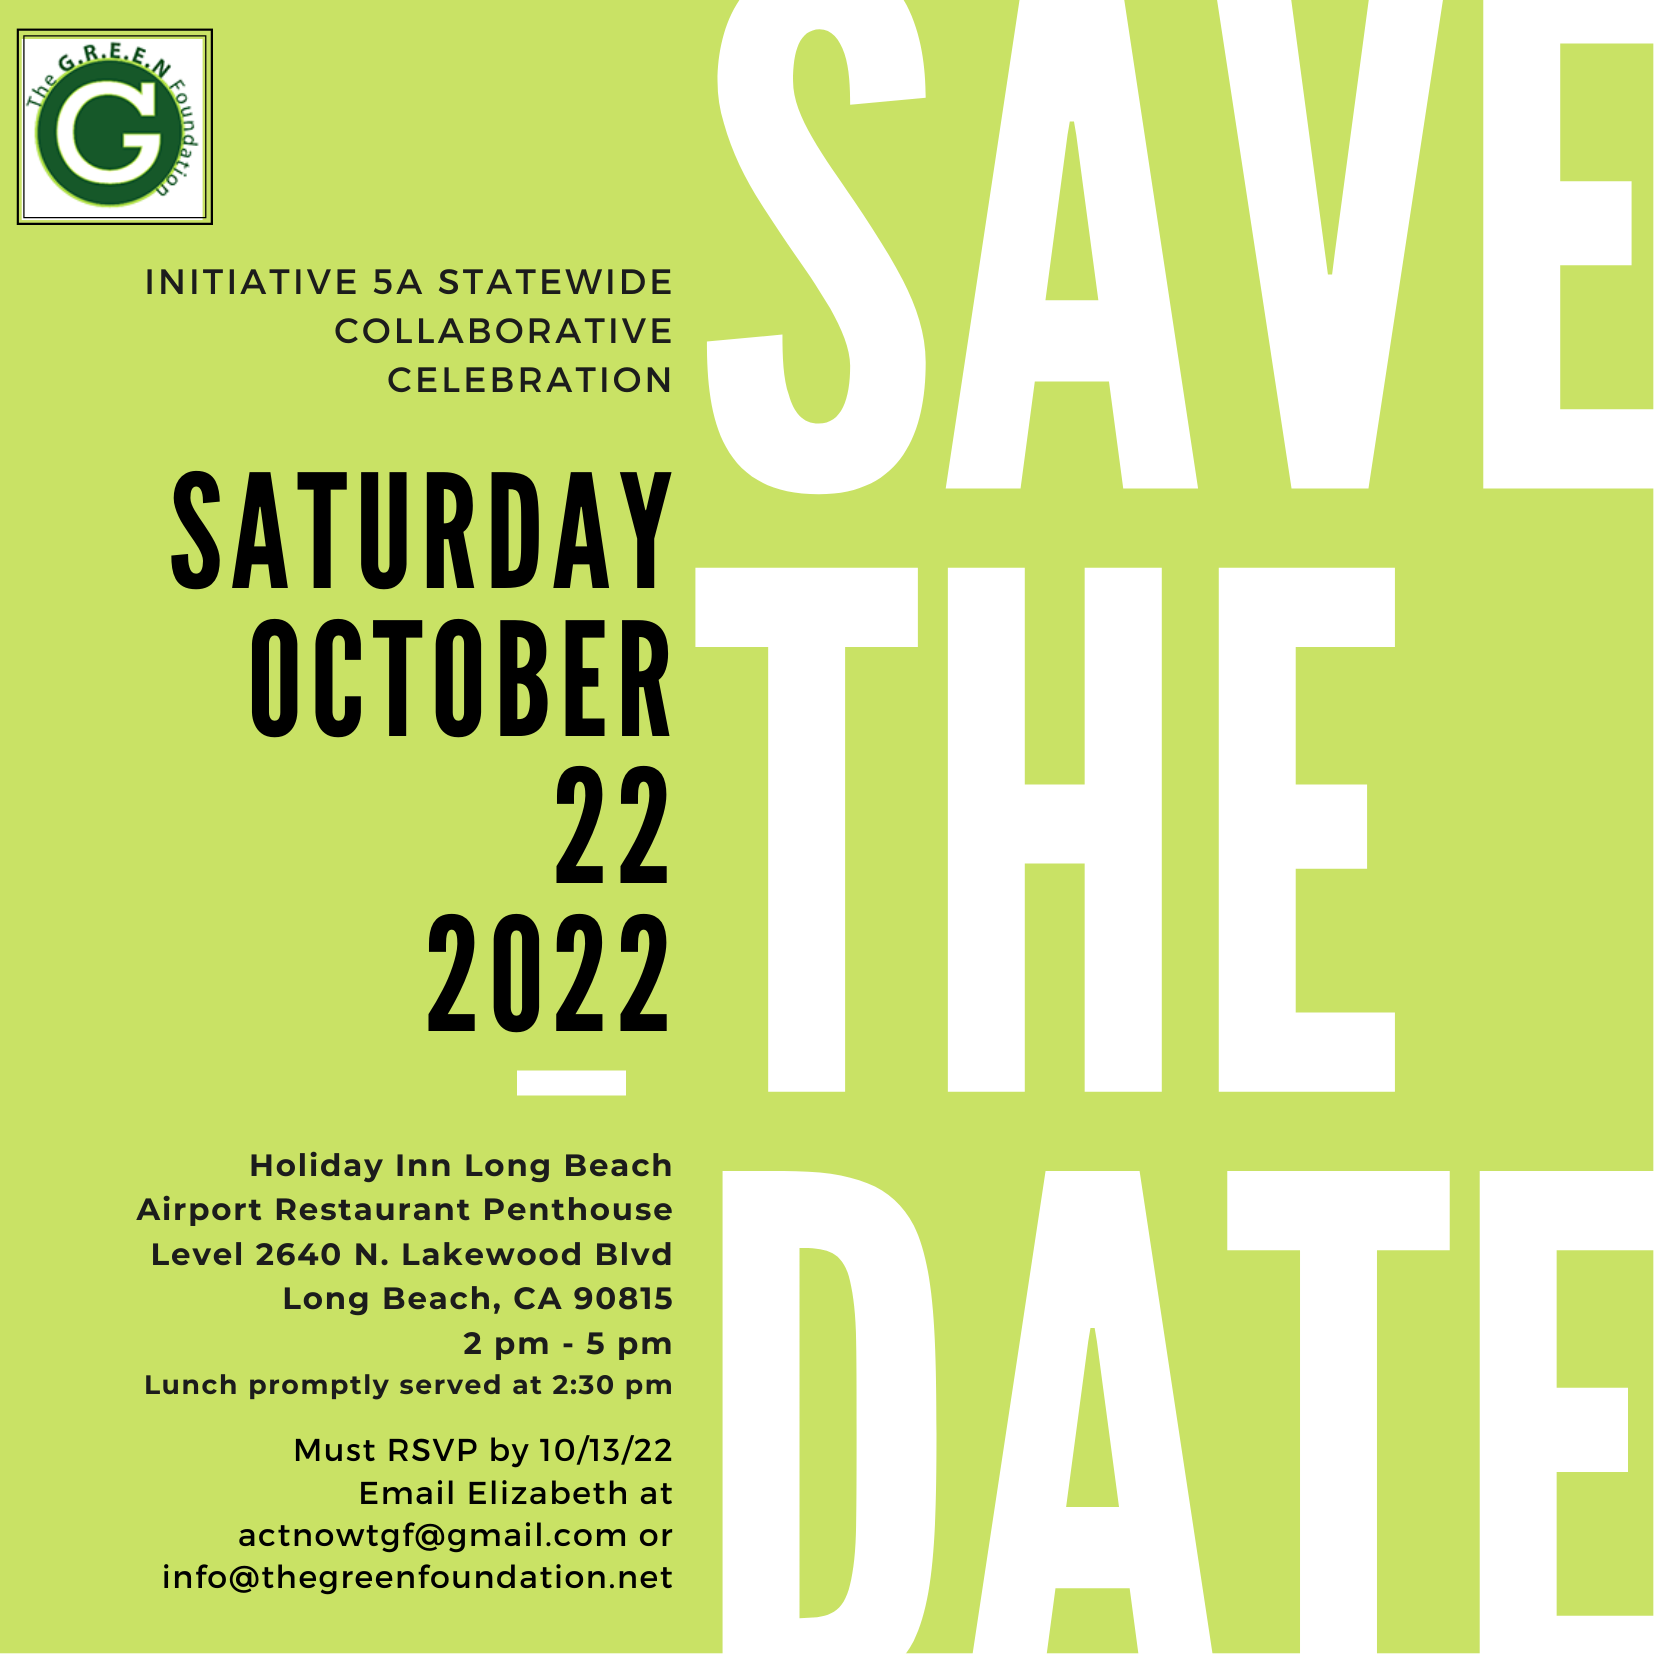 TGF 2022 Celebration at Holiday Inn Long Beach Ca on October 22, 2022